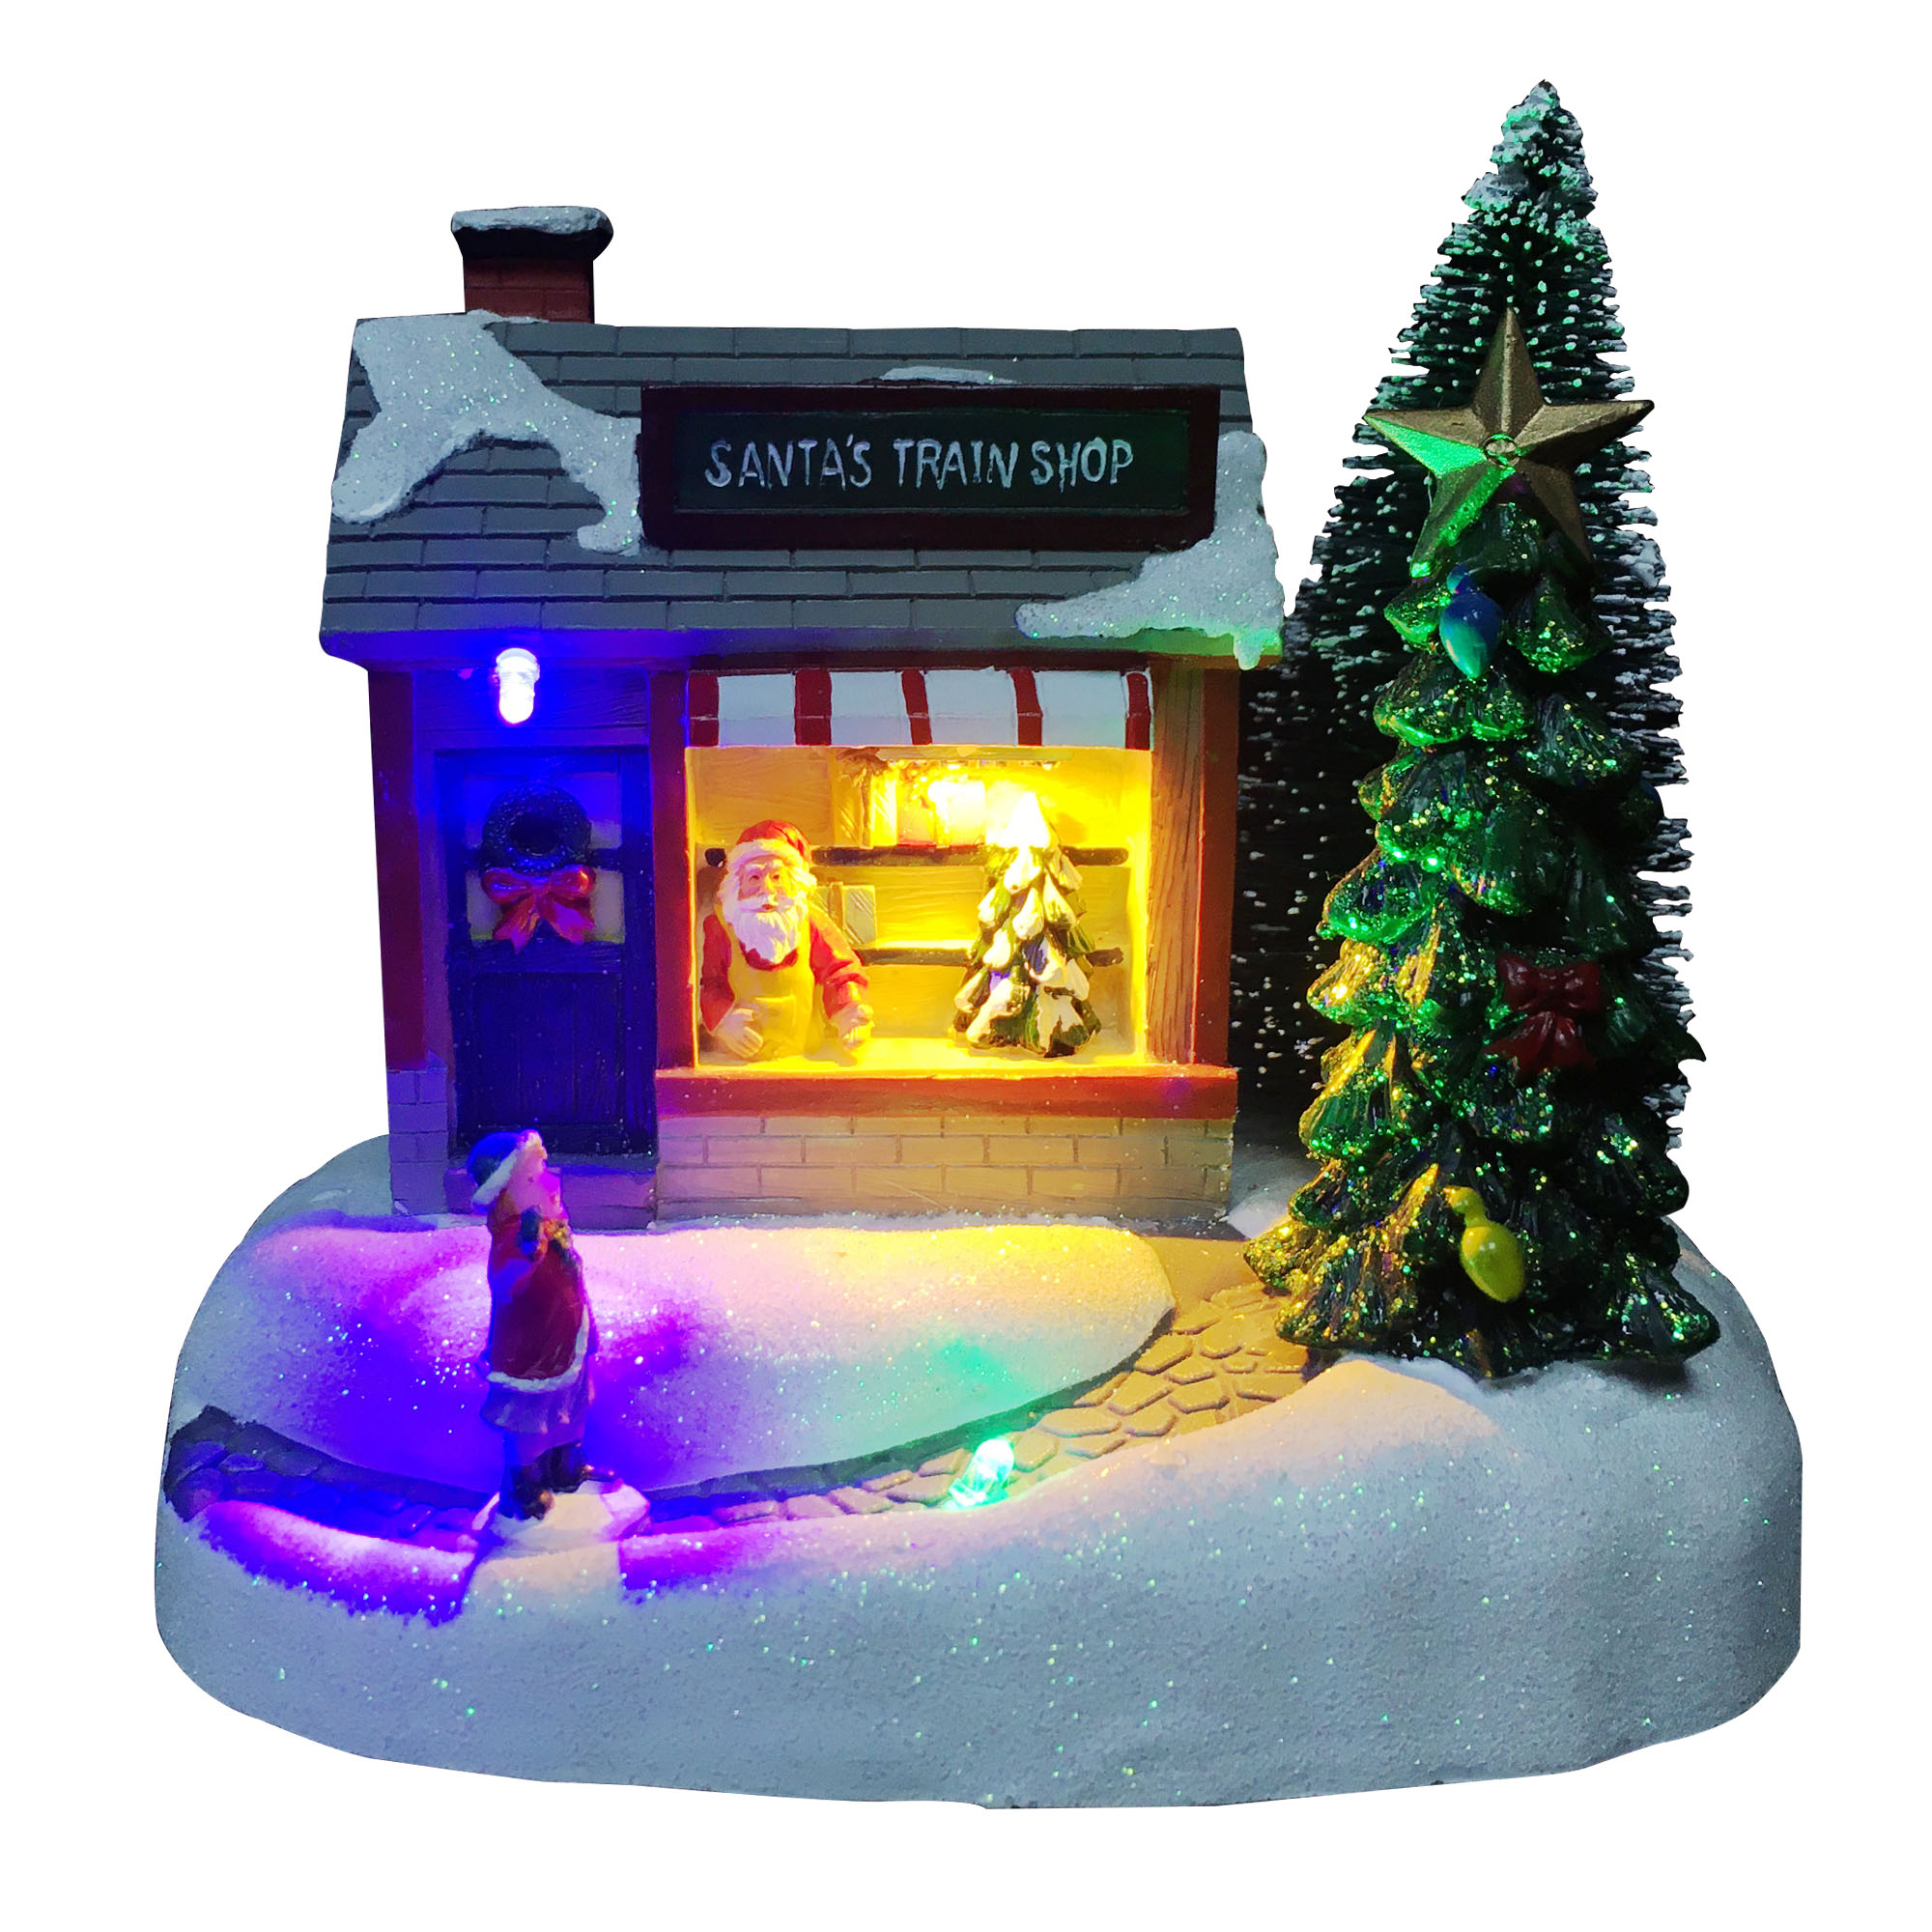 2018 High quality Mini Train Set For Christmas Village - Melody colorful Xmas village Christmas Decoration Santa’s Train Shop scene led lighted Christmas house – Melody